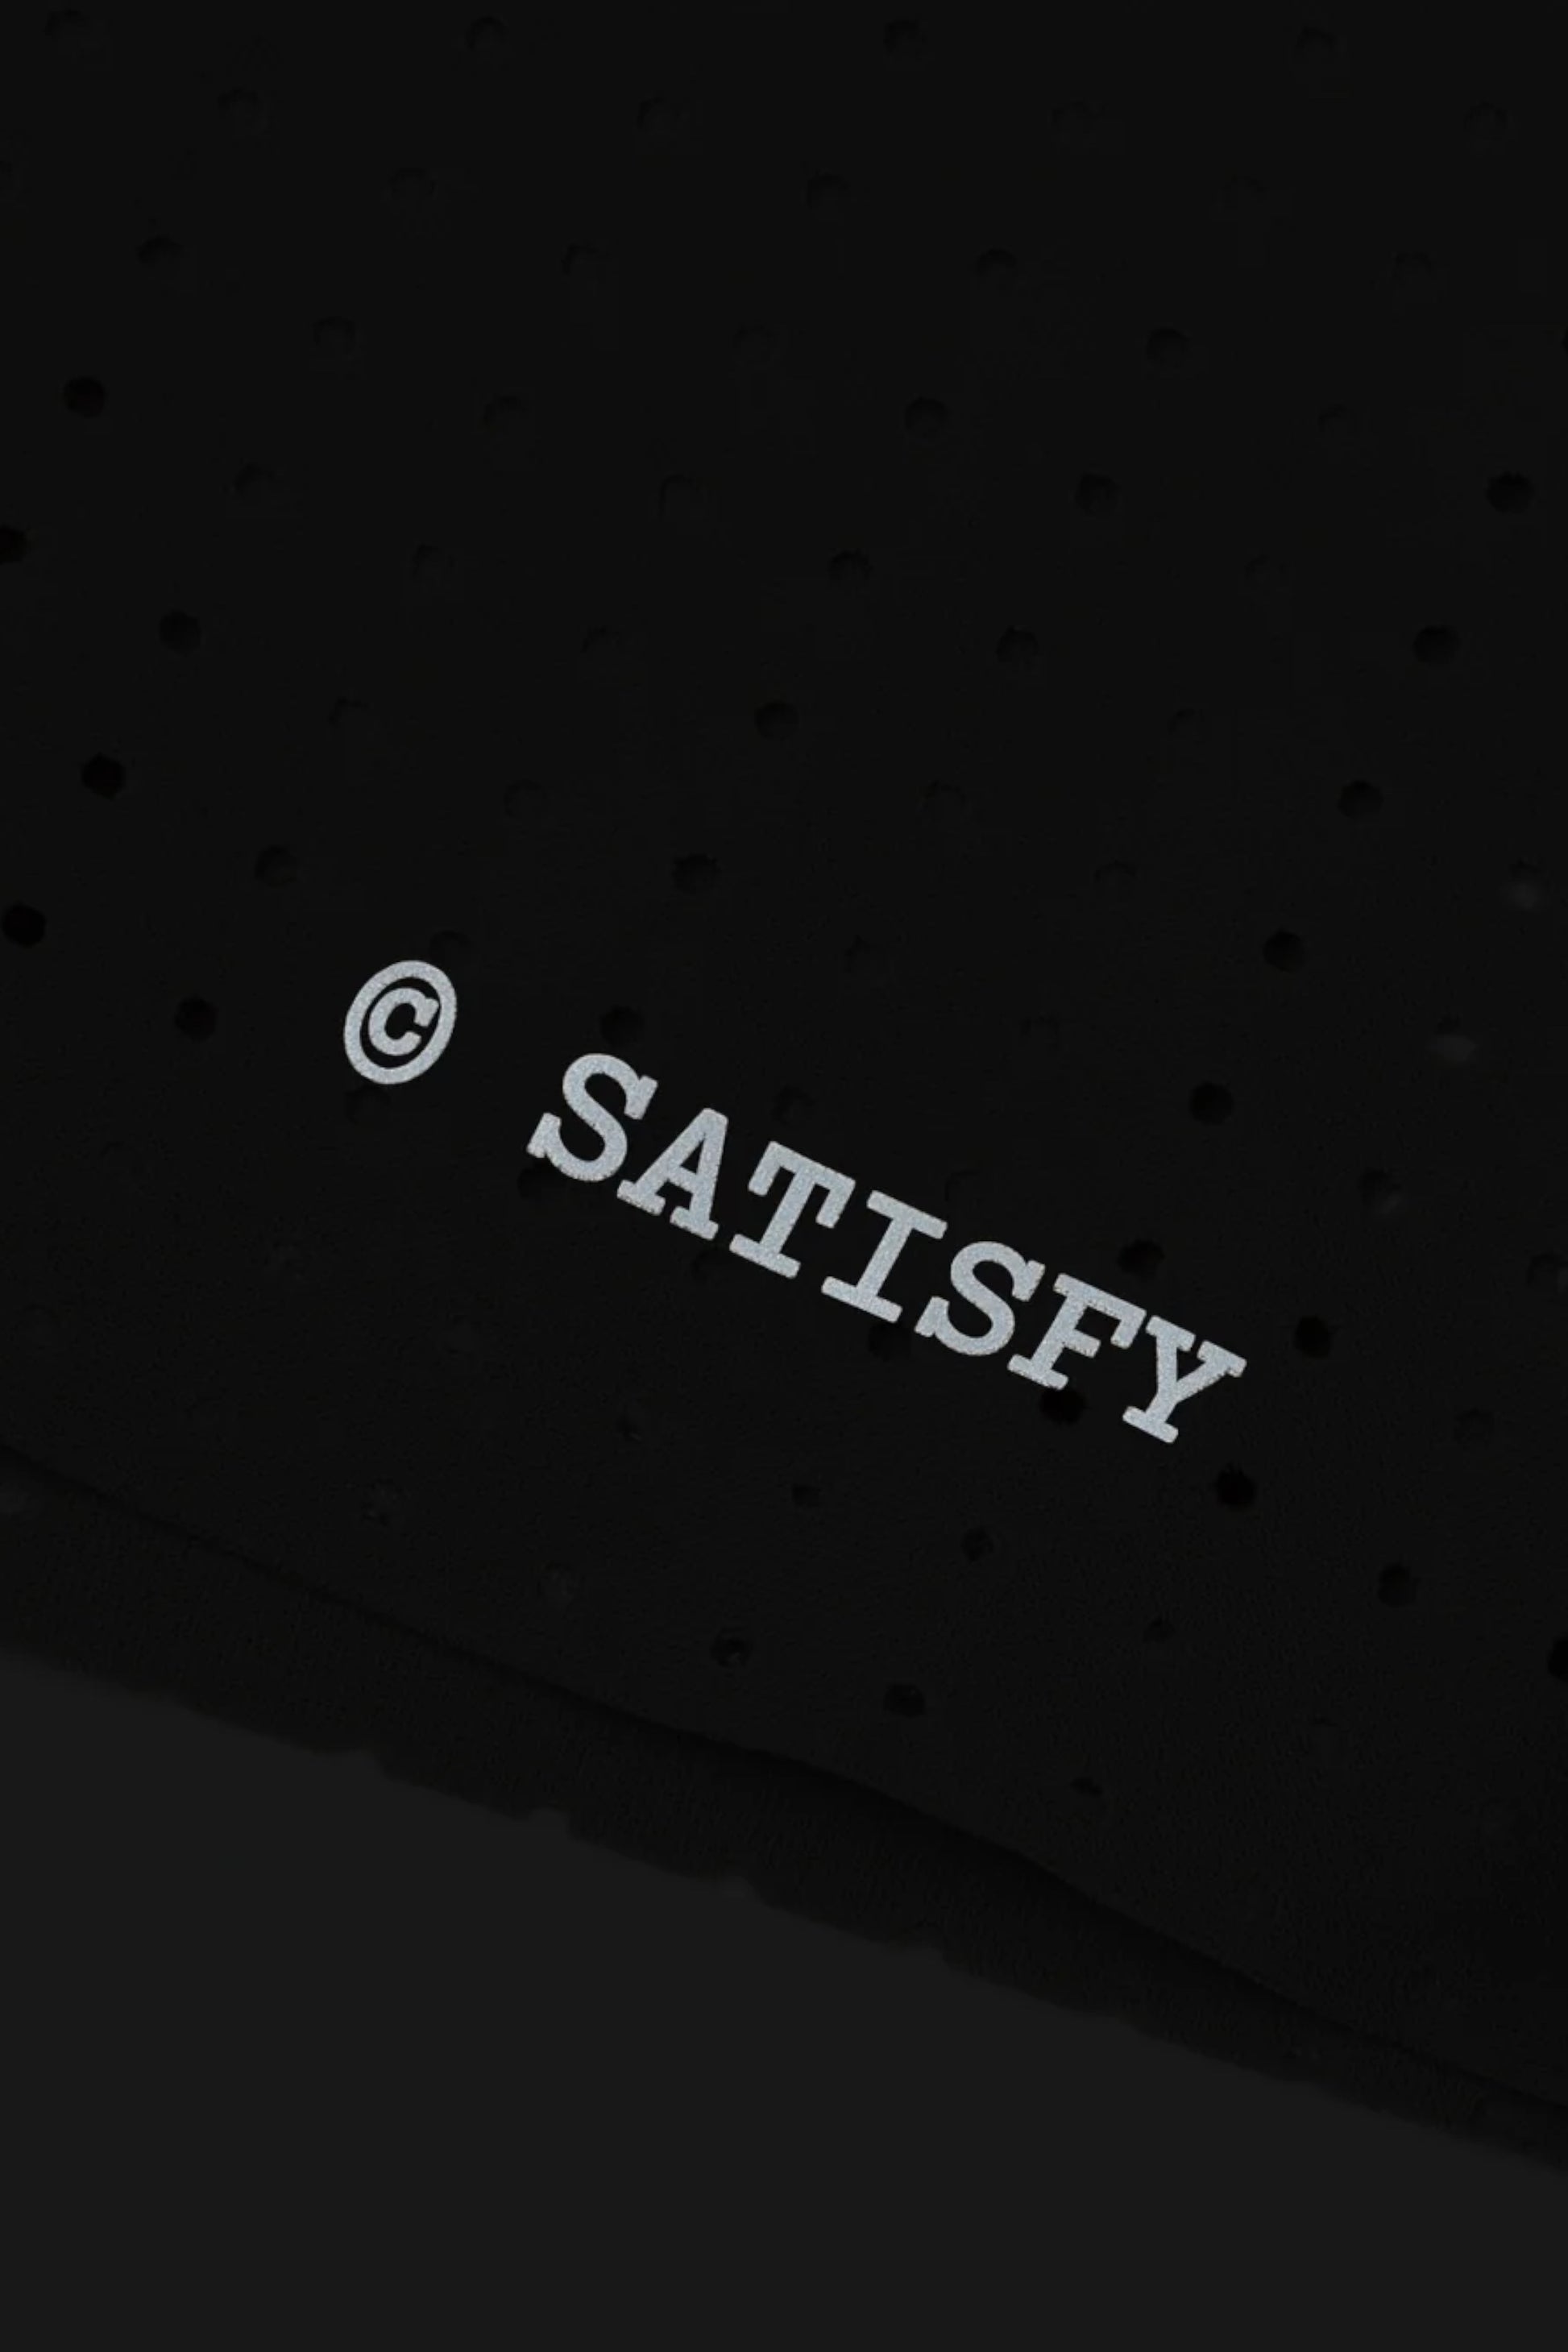 Satisfy - Space‑O™ 5" Shorts (Black)